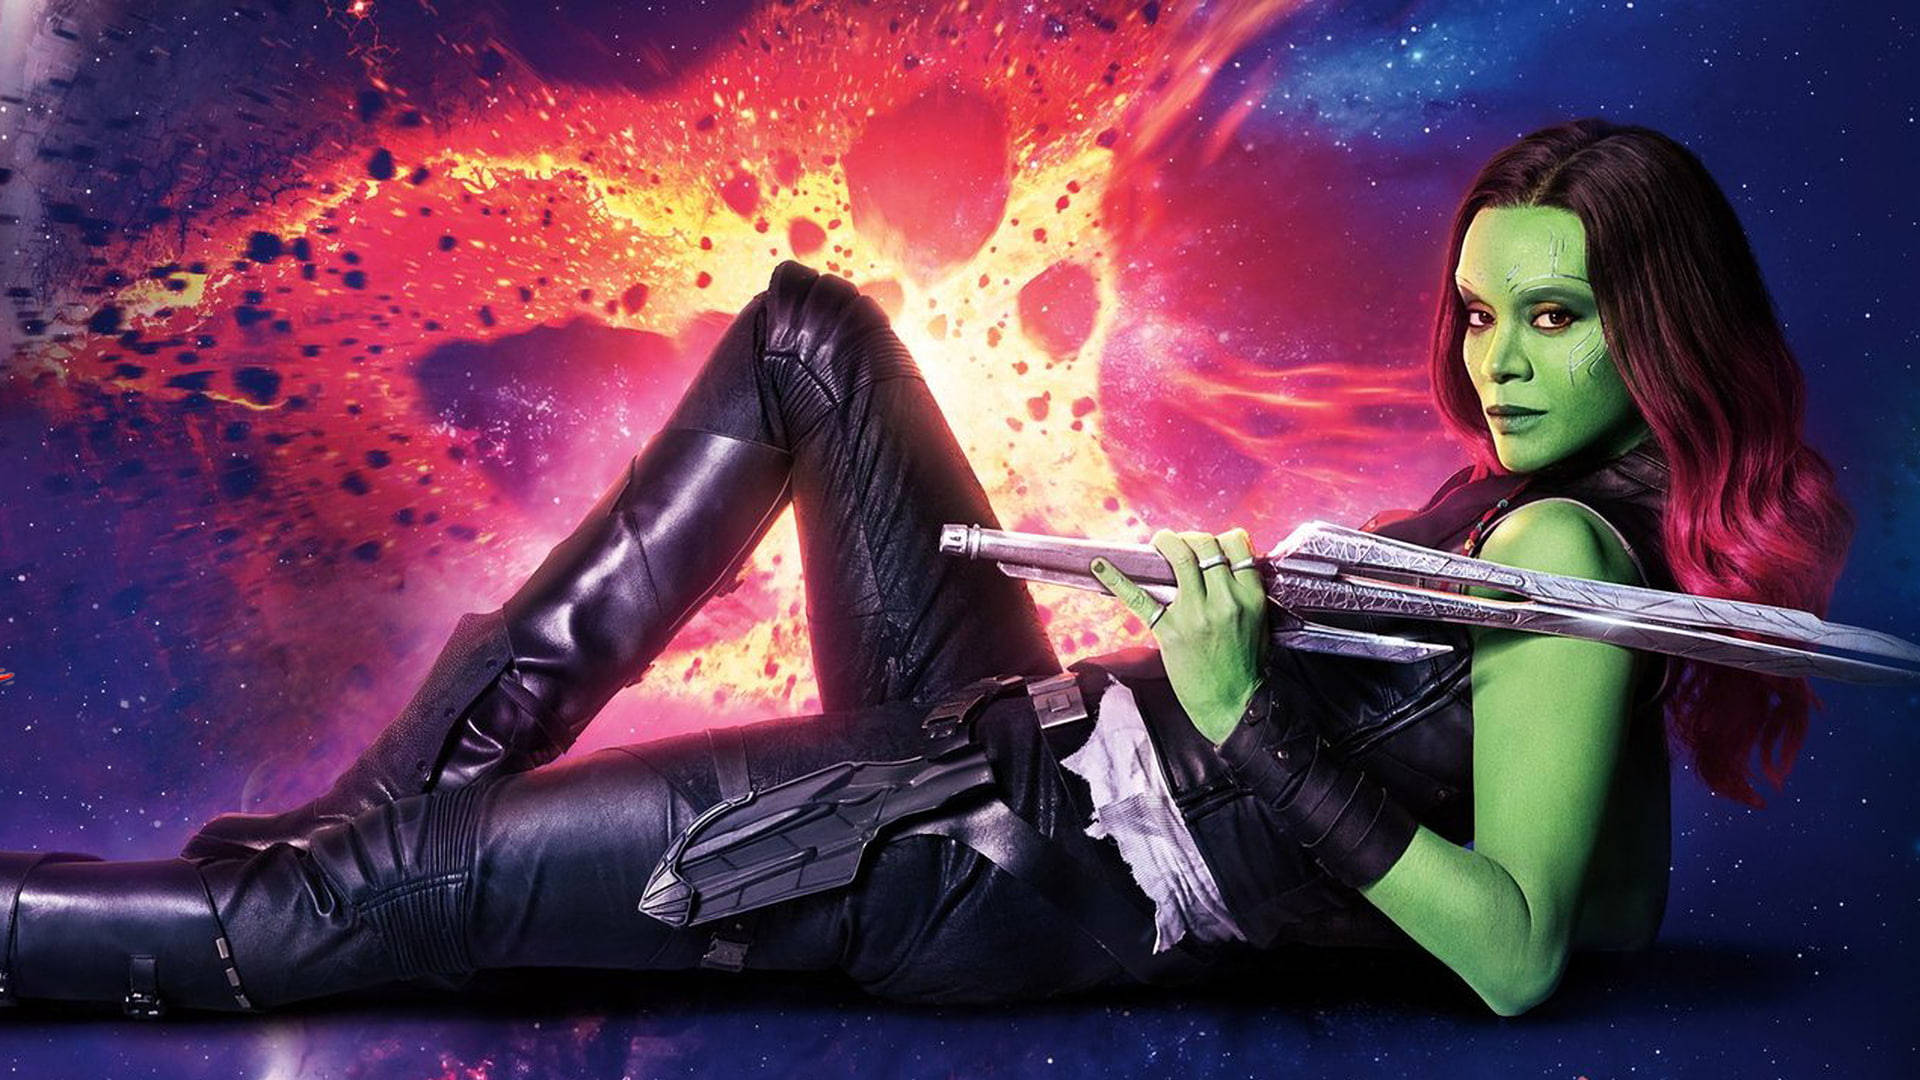 Zoe Saldana As Gamora With Sword